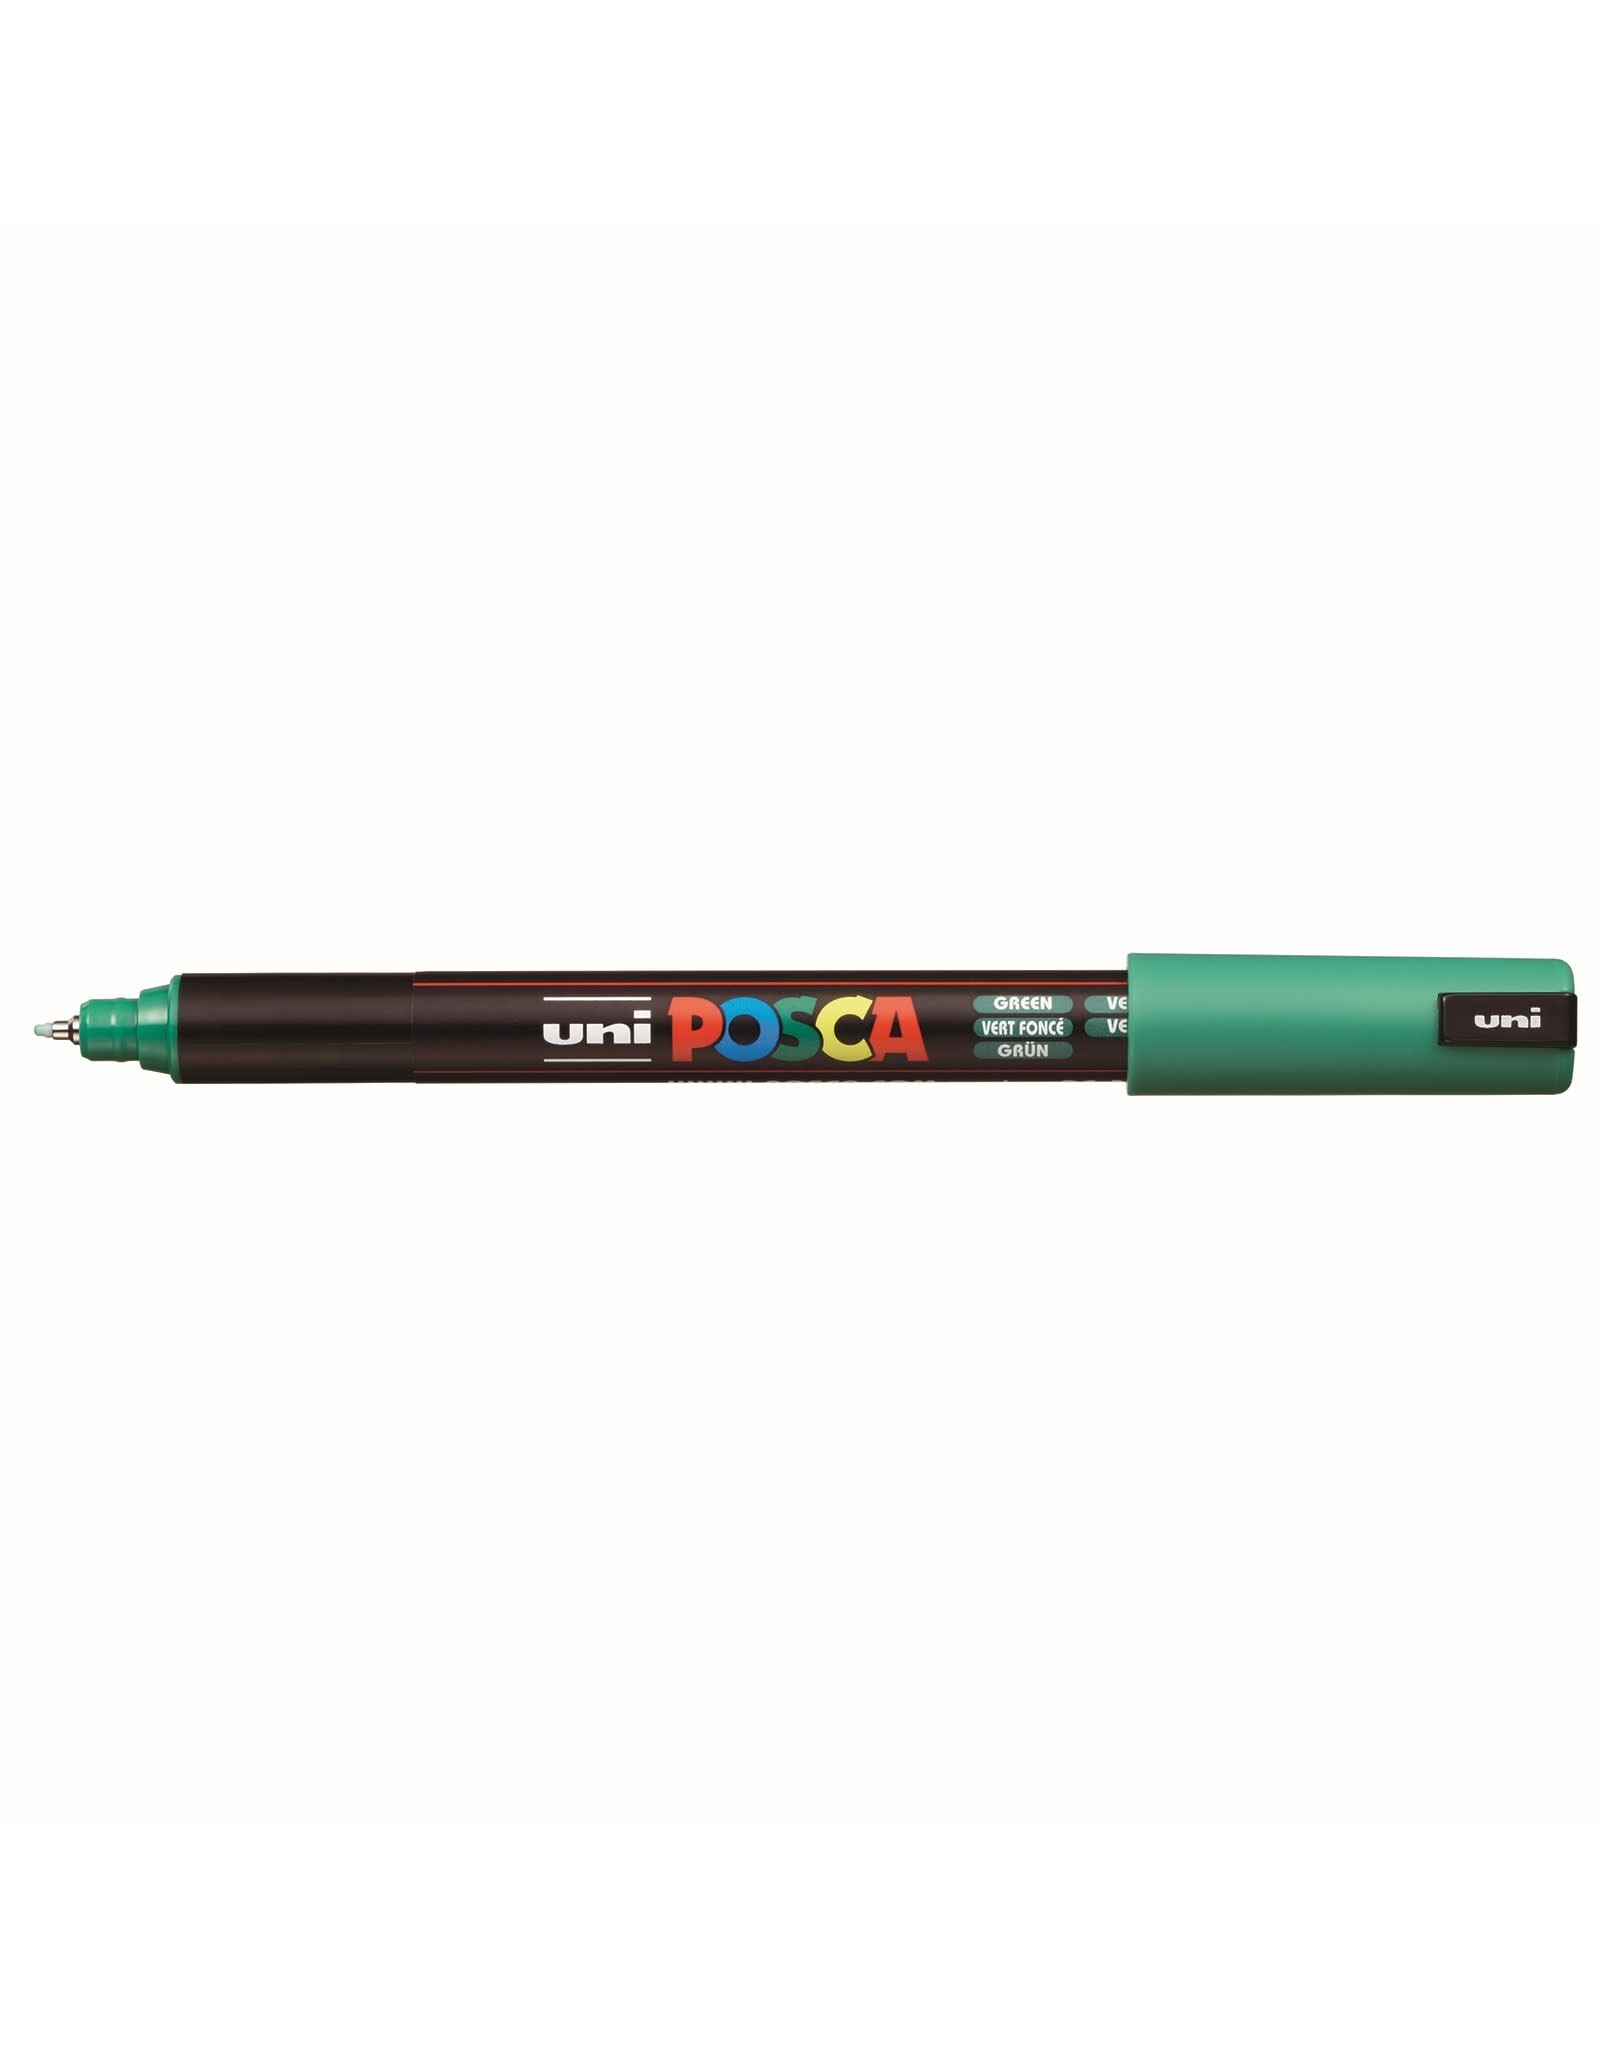 POSCA Uni POSCA Paint Marker, Extra Fine Metal Tip, Green